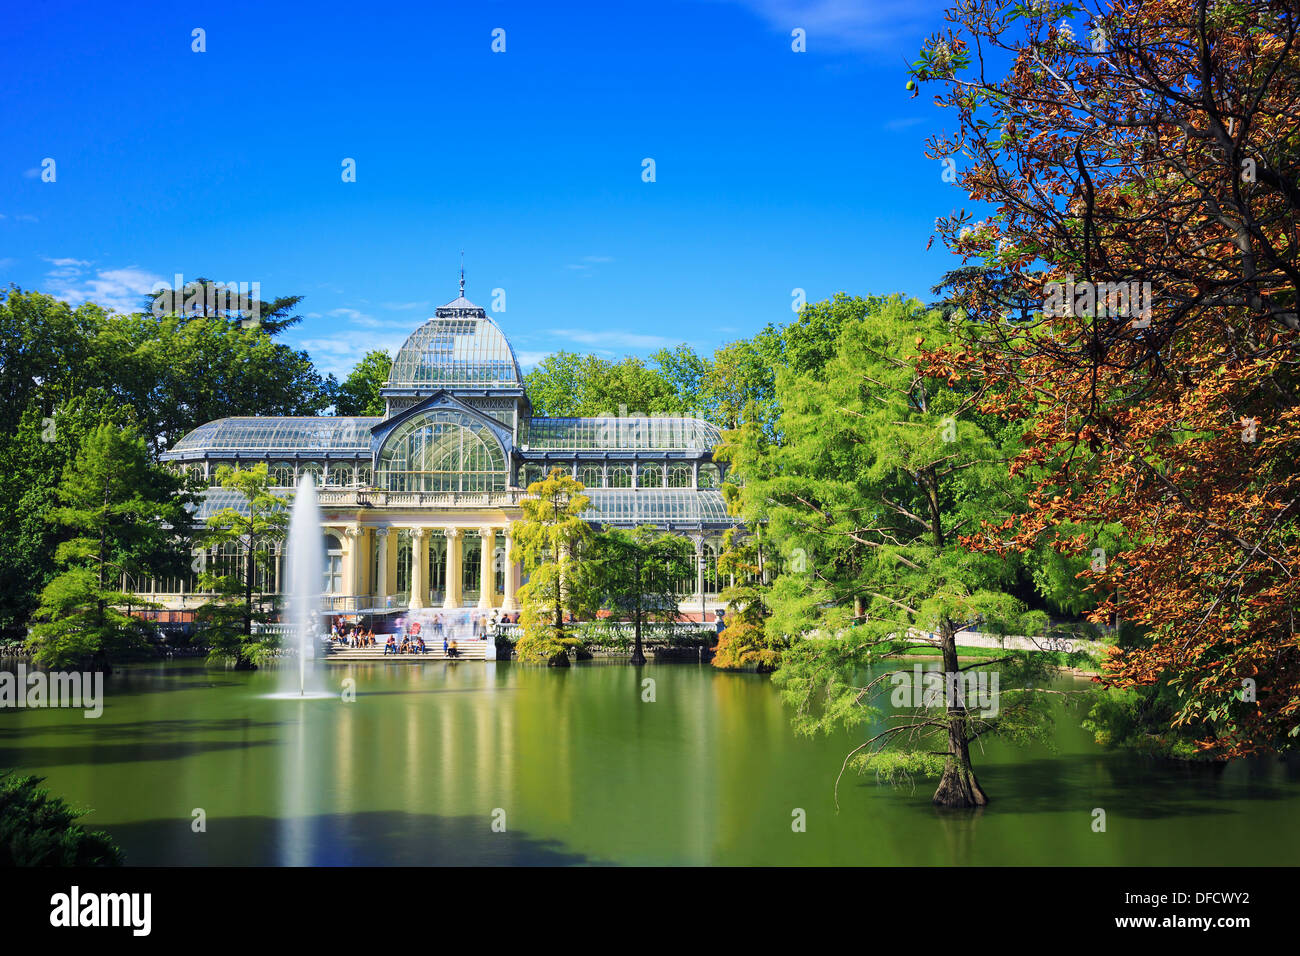 Crystal Palace (Palacio de cristal) in Retiro Park,Madrid, Spain. Stock Photo